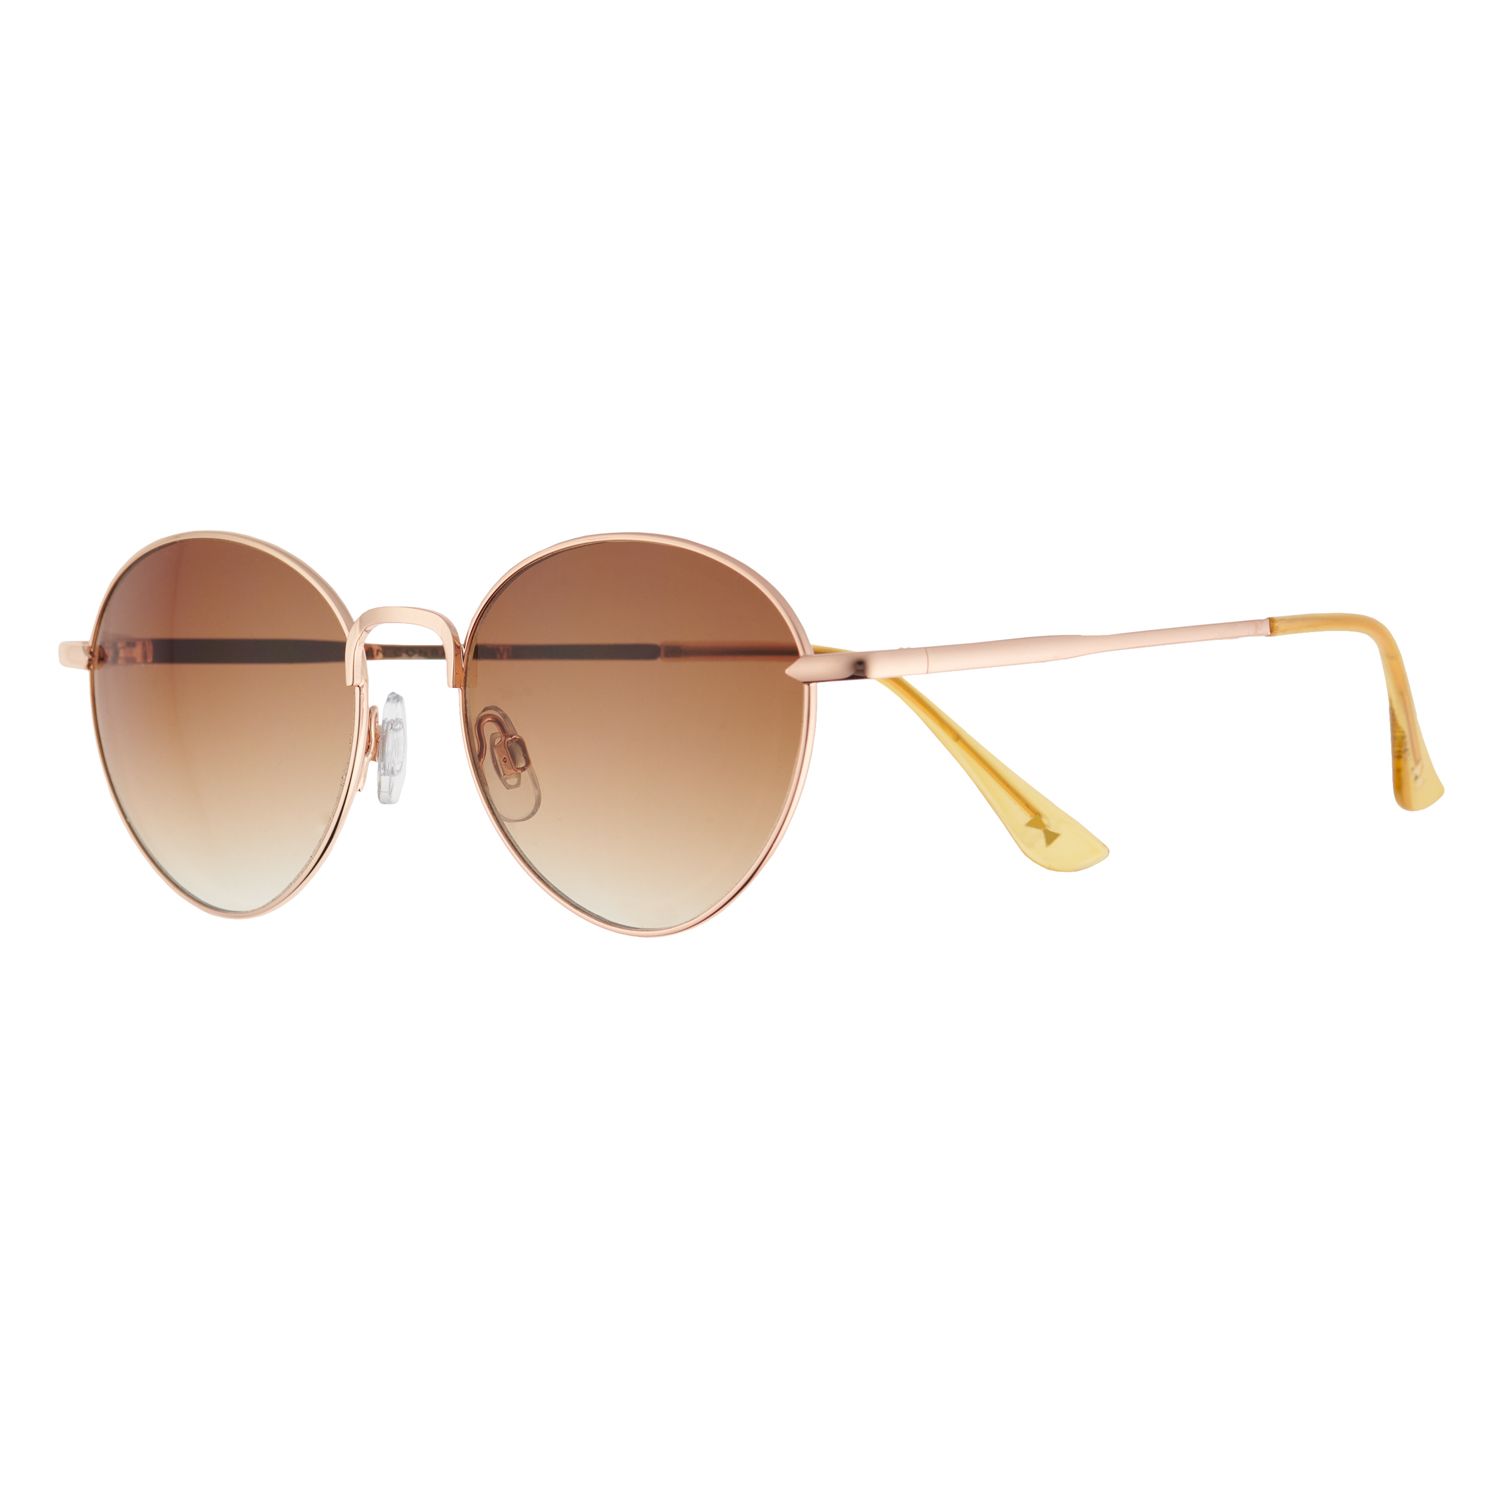 Image for LC Lauren Conrad Women's 51mm Gold Tone Gradient Round Sunglasses at Kohl's.